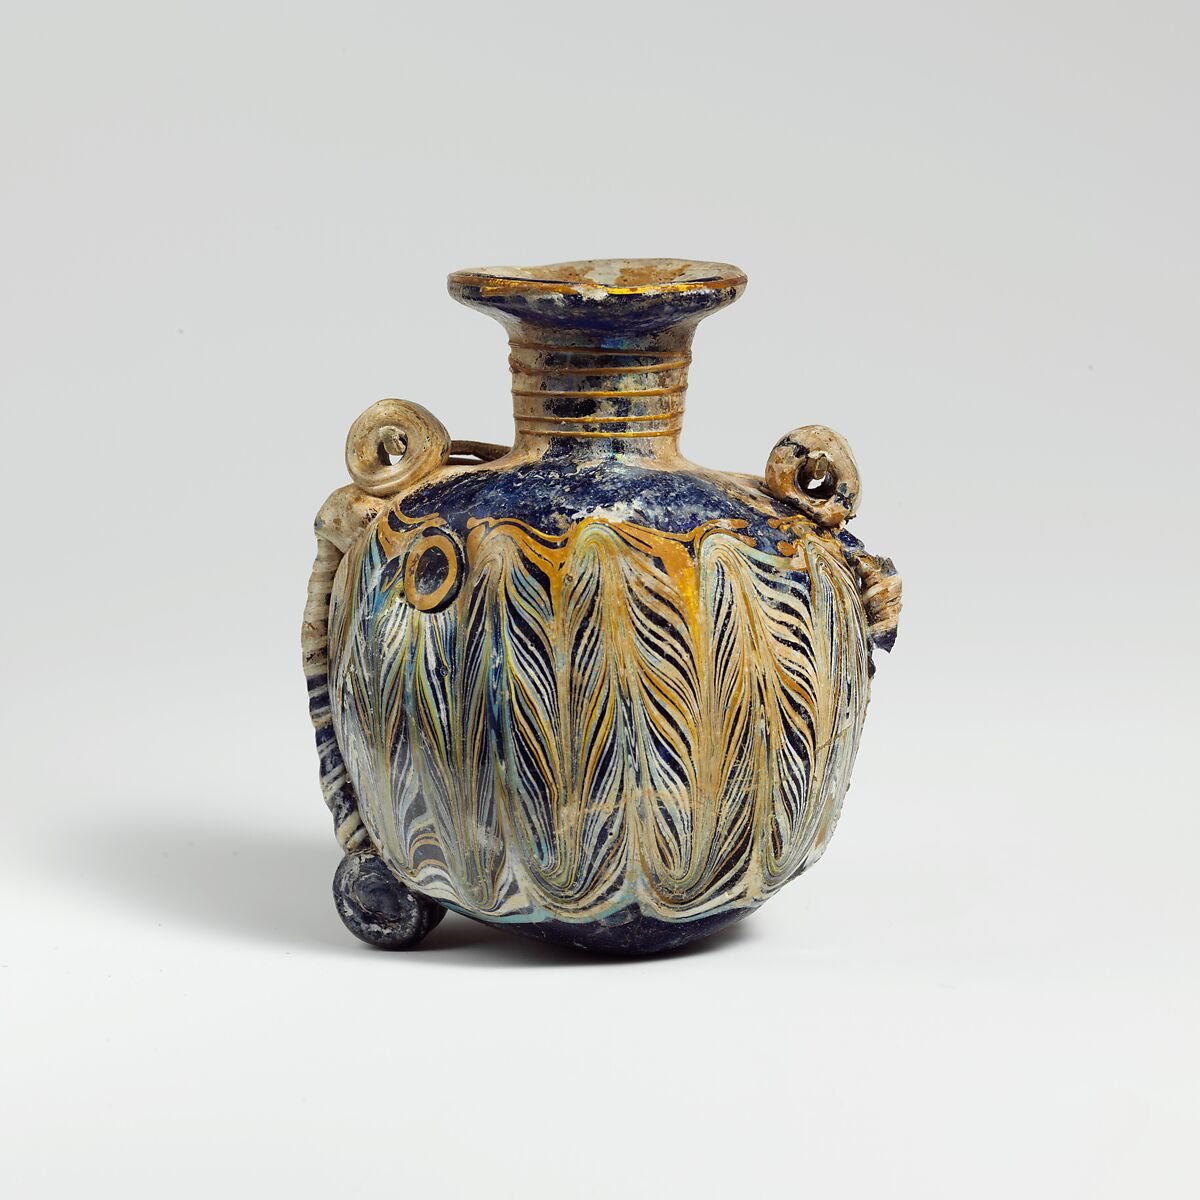 Glass lentoid aryballos (perfume bottle), Glass, Eastern Mediterranean or Italian